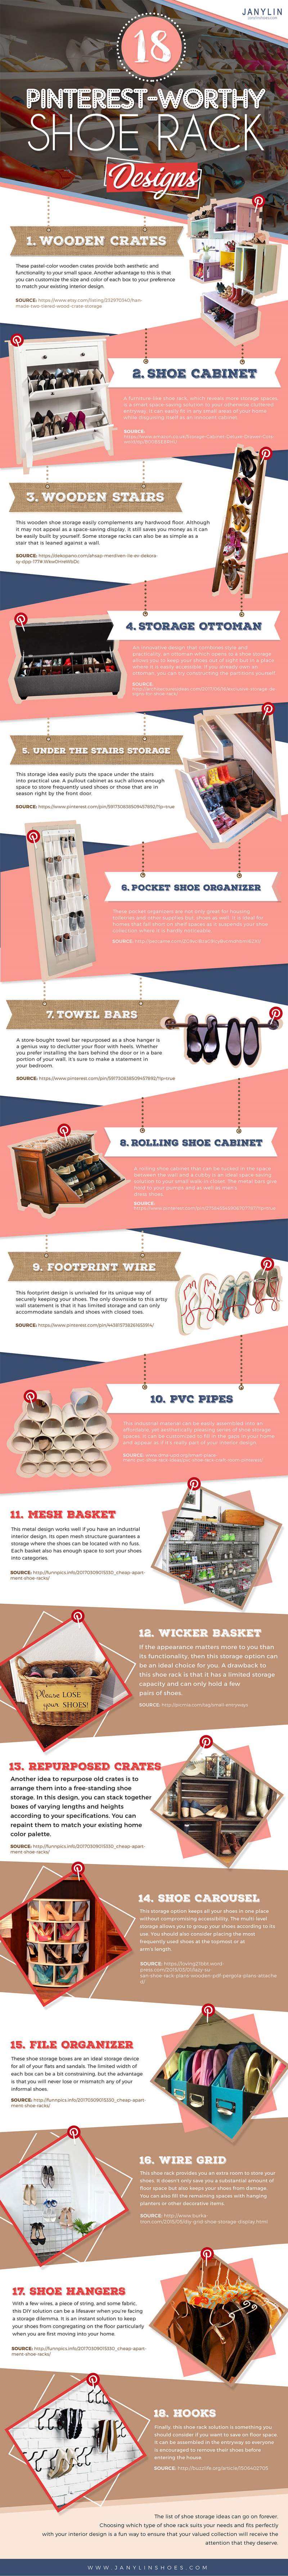 18 Pinterest-Worthy Shoe Rack Designs